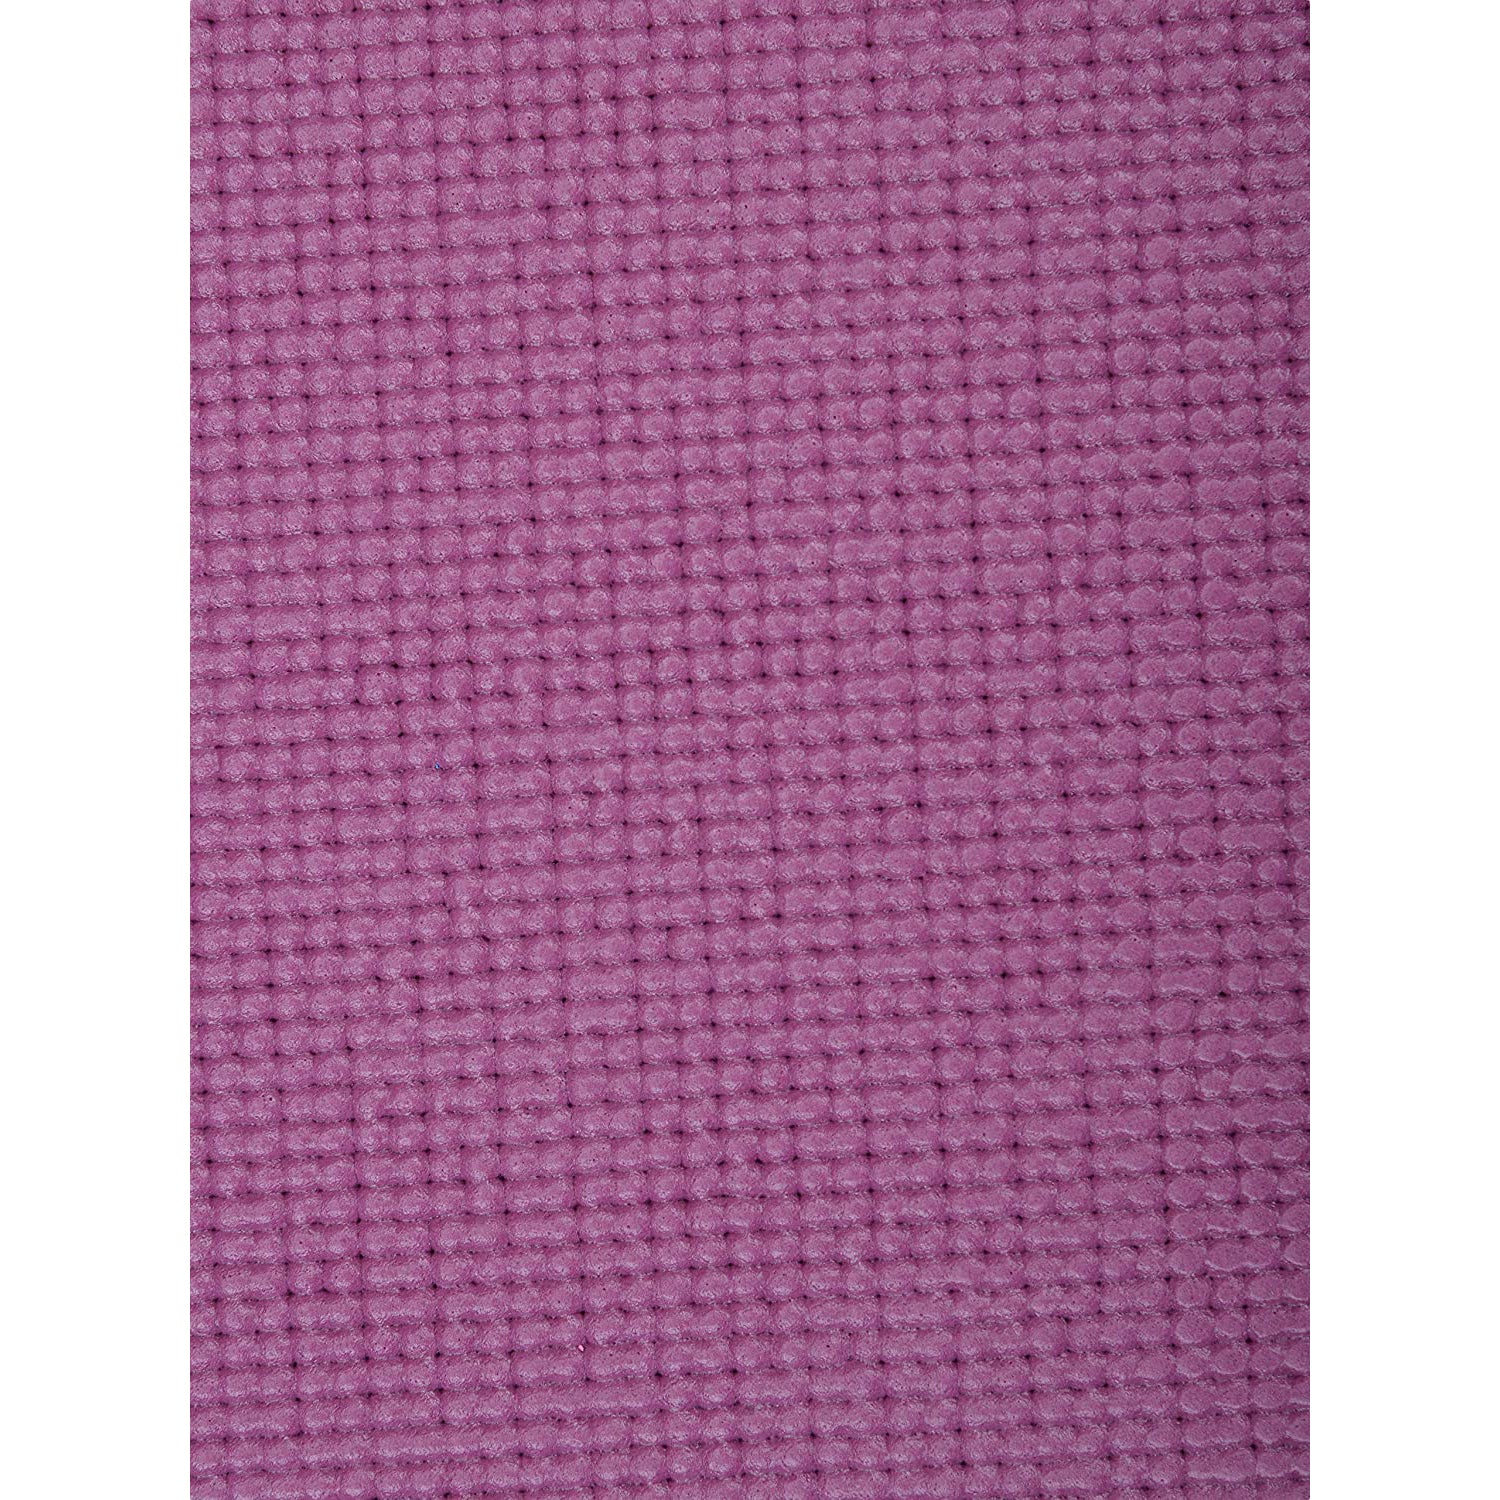 MagFit Yoga Mat 6 mm - Purple - Best Price online Prokicksports.com